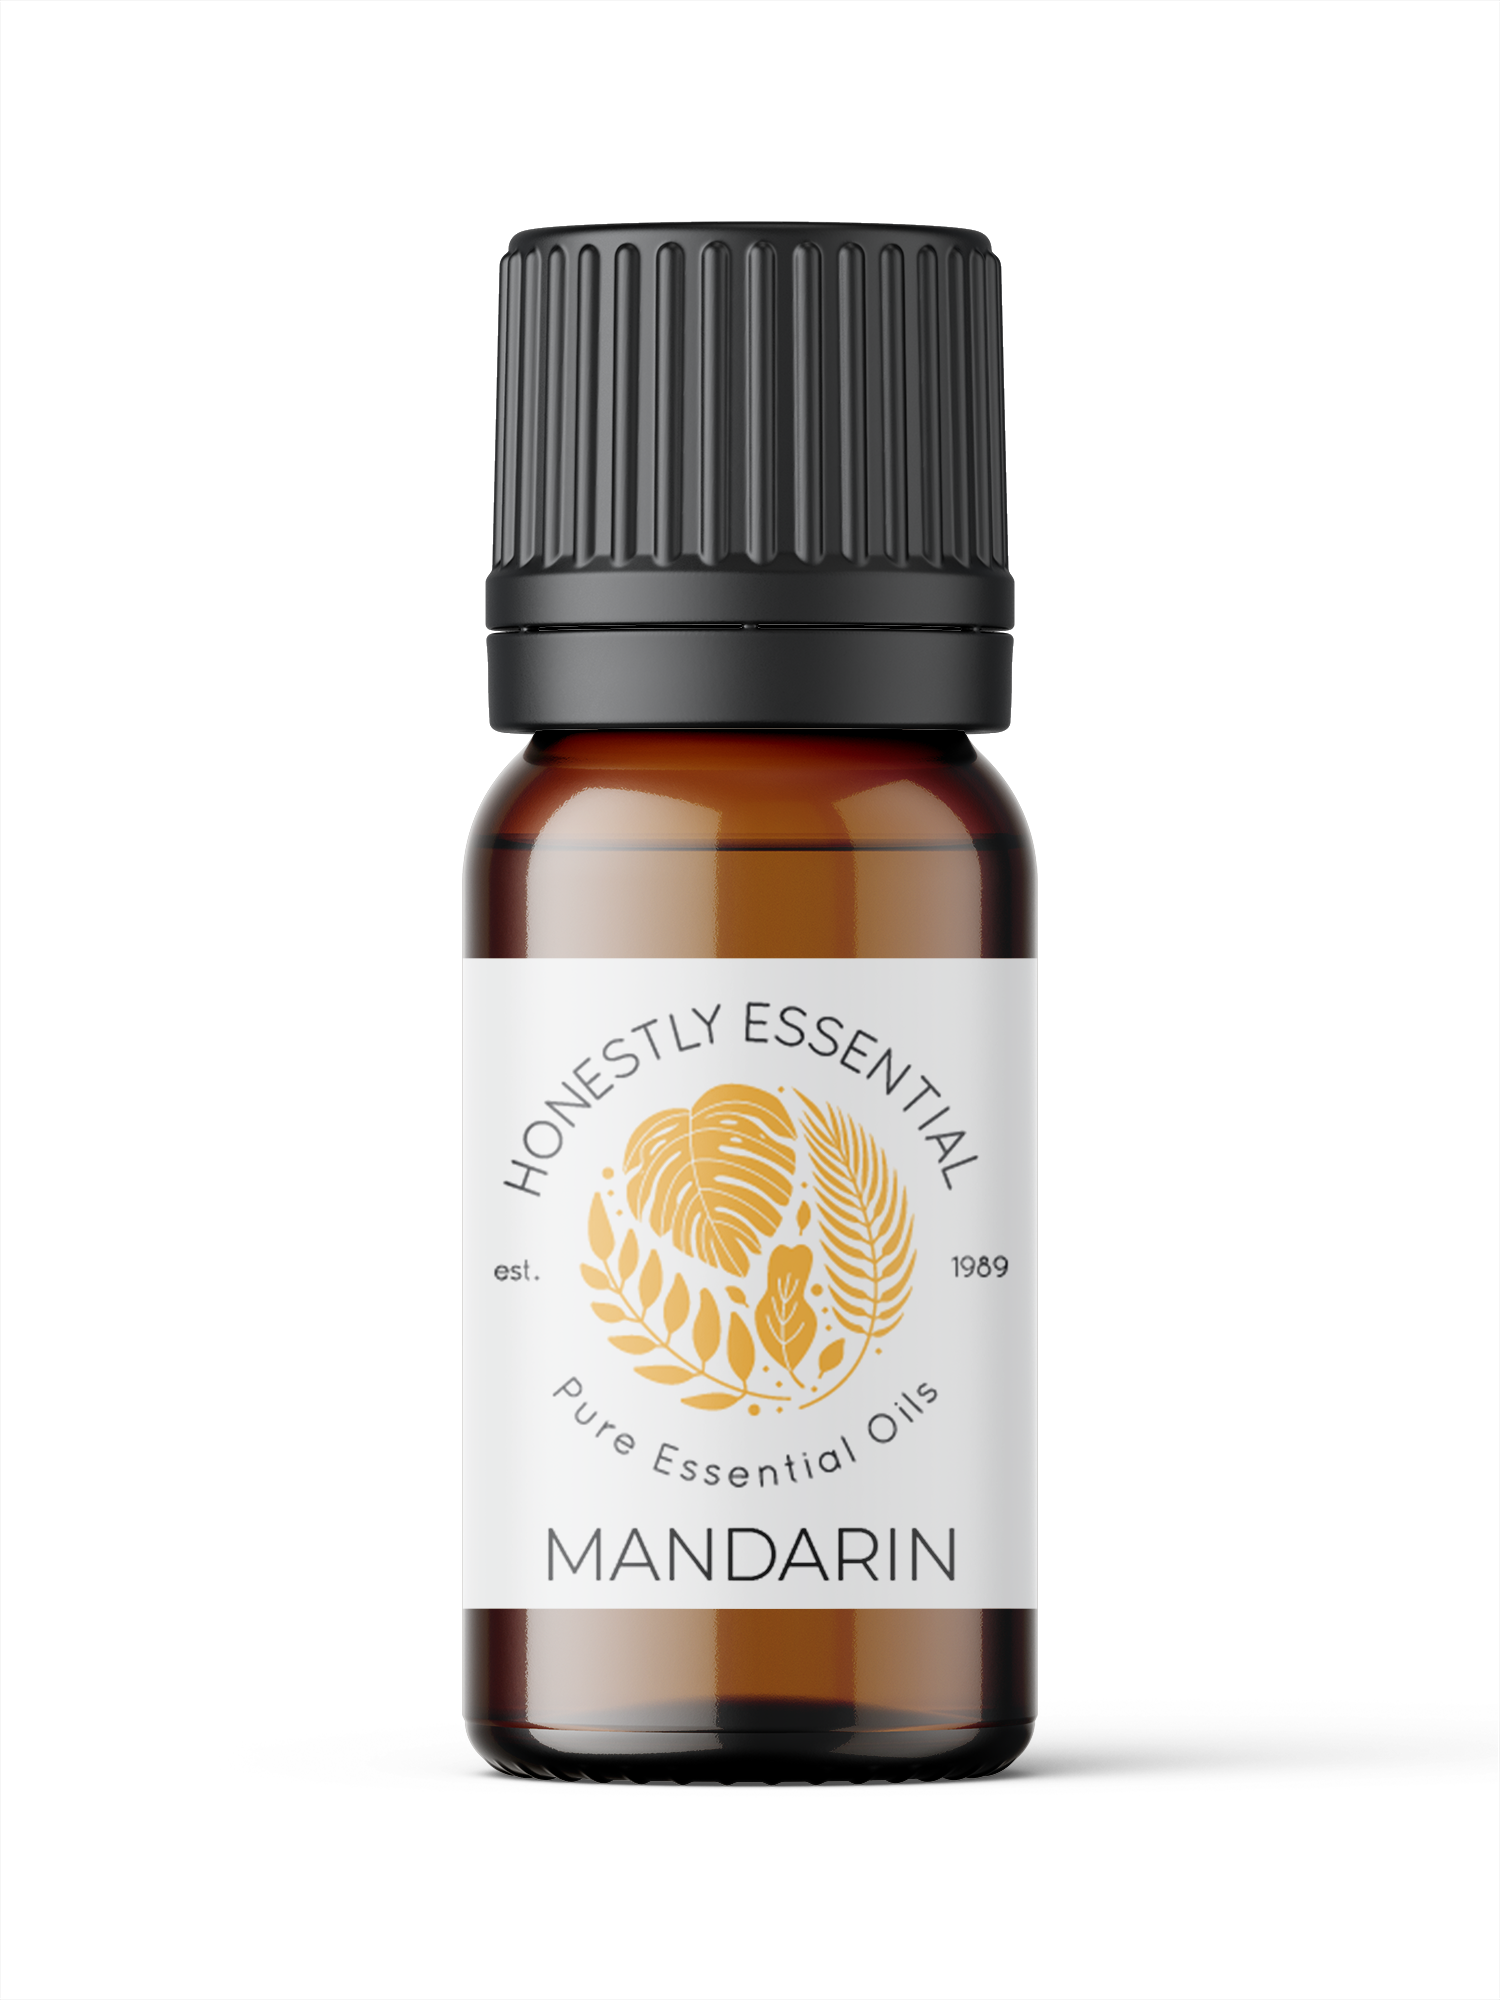 Mandarin Essential Oil - Essential Oils | Honestly Essential Oils citrus, citrus essential oil, digestion, kid safe